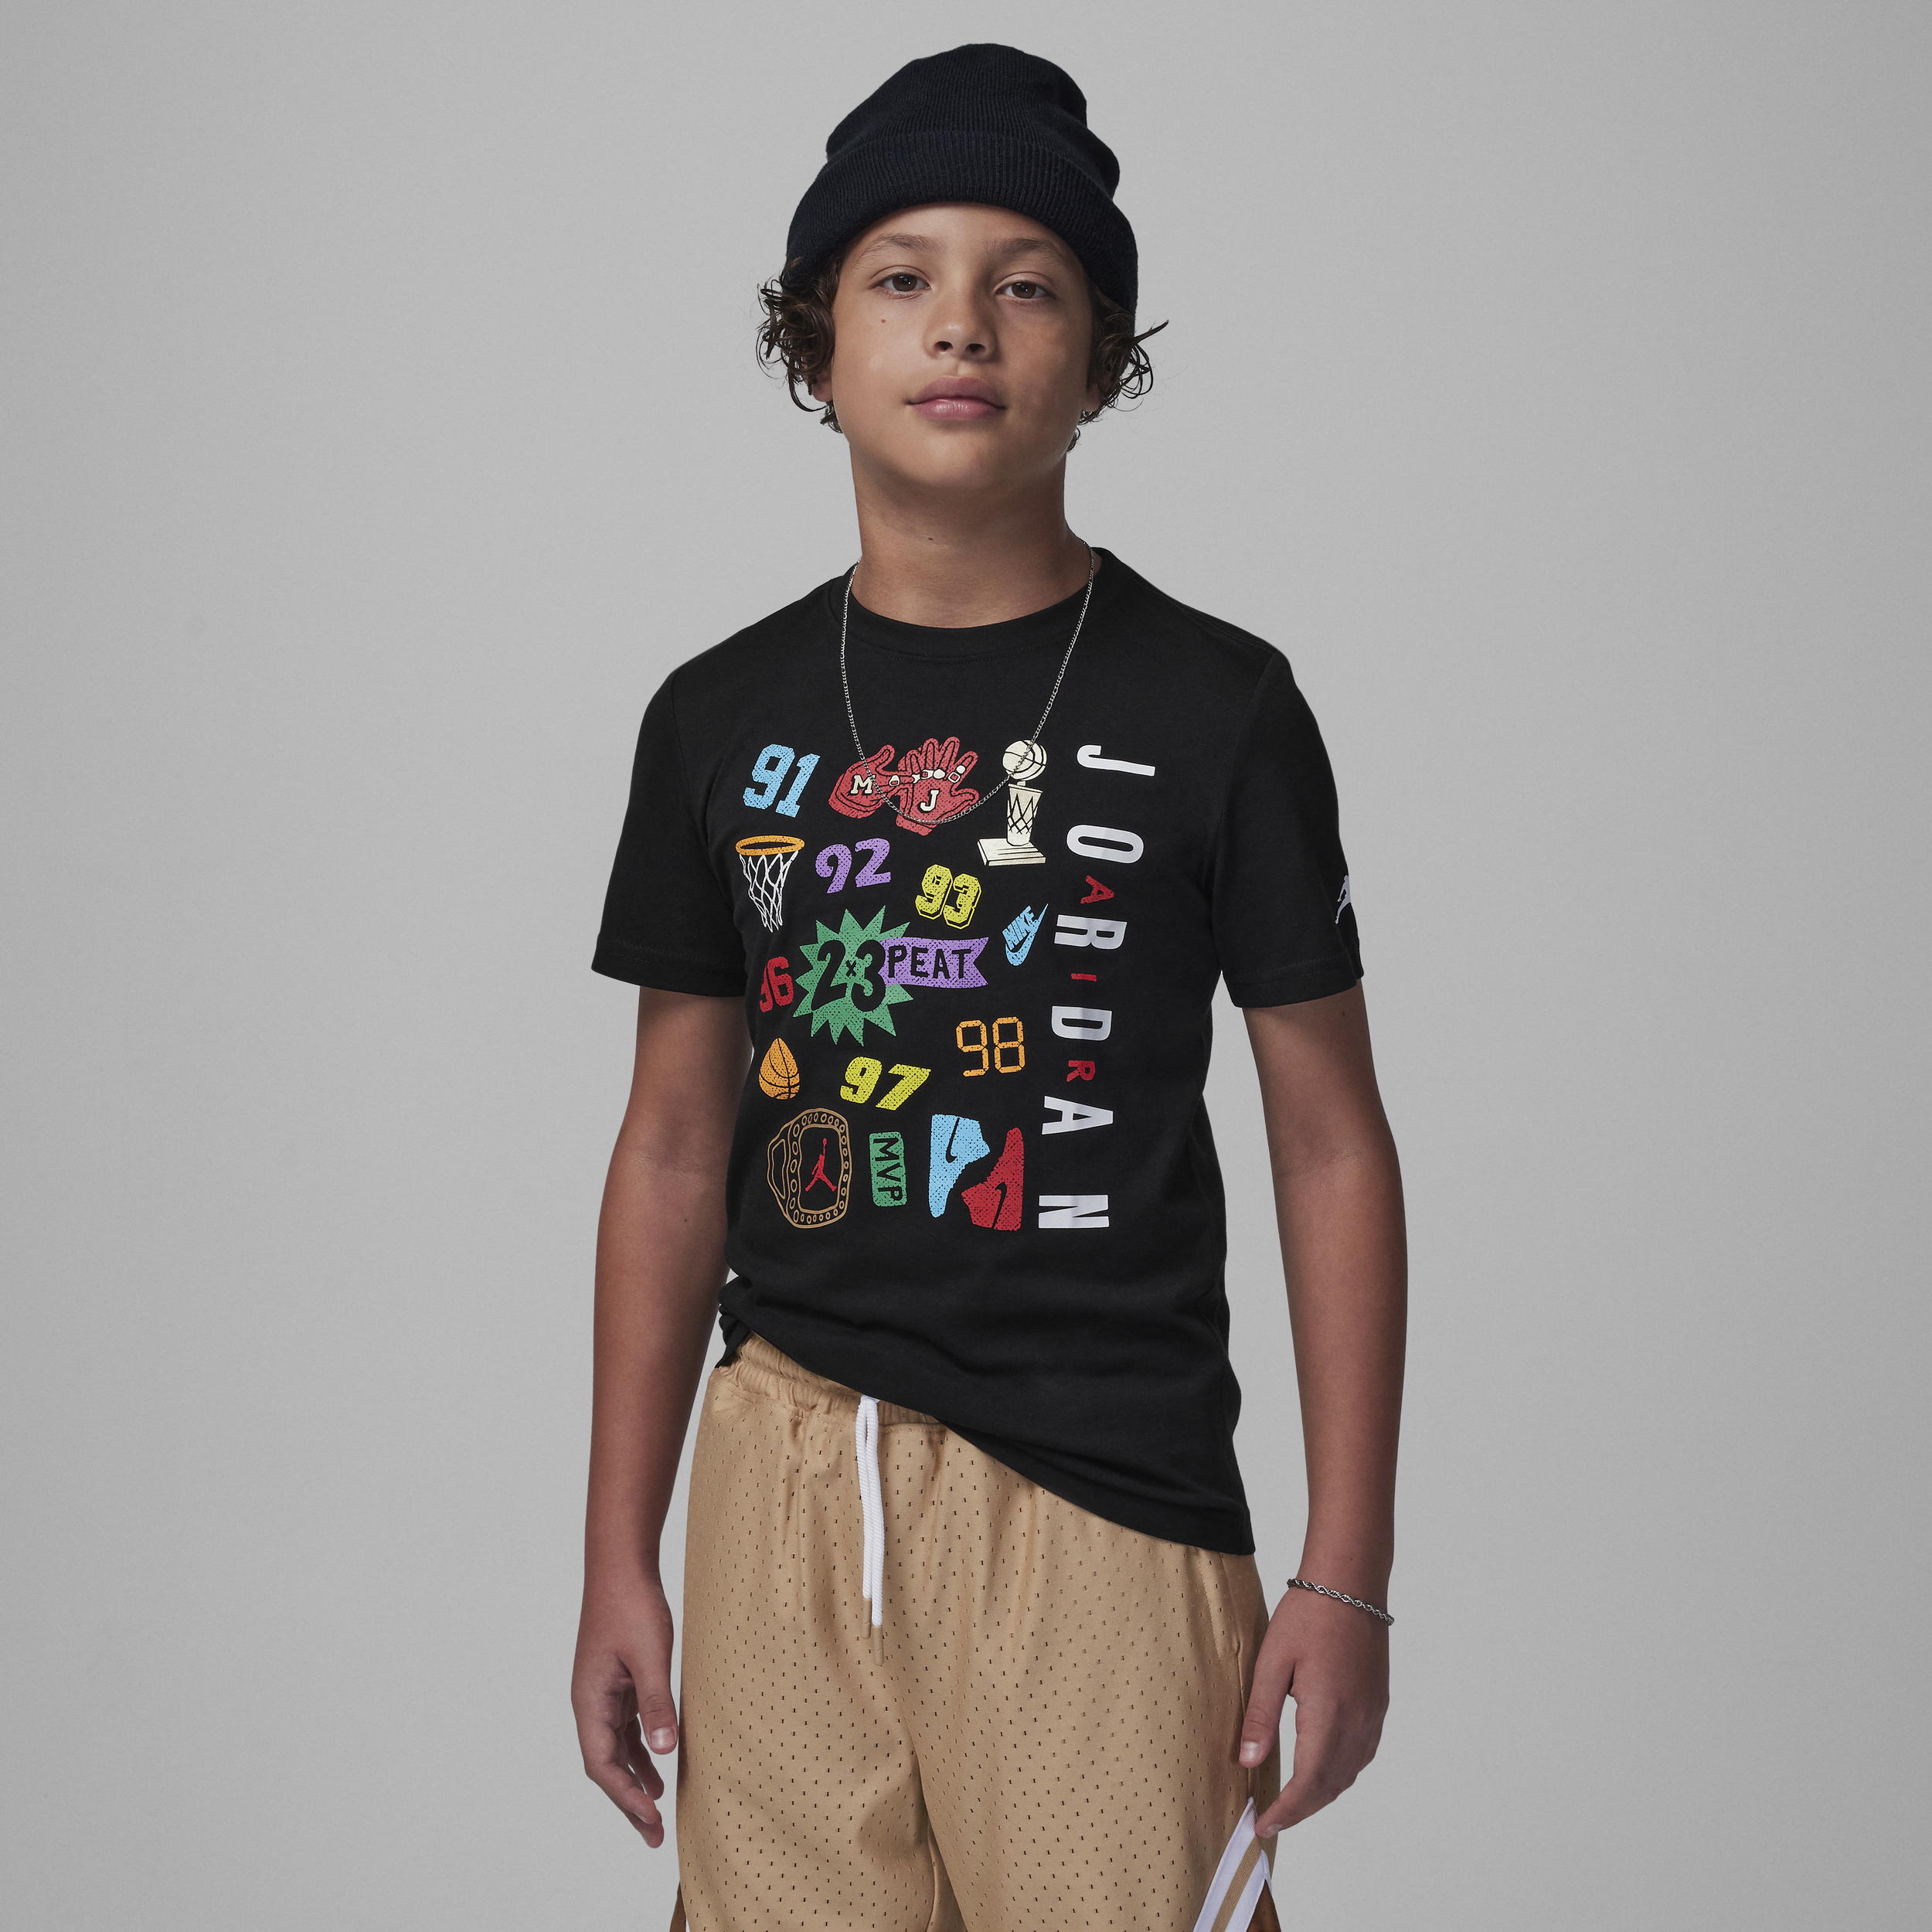 Jordan 2x3 Peat Tee Camiseta - Niño/a - Negro